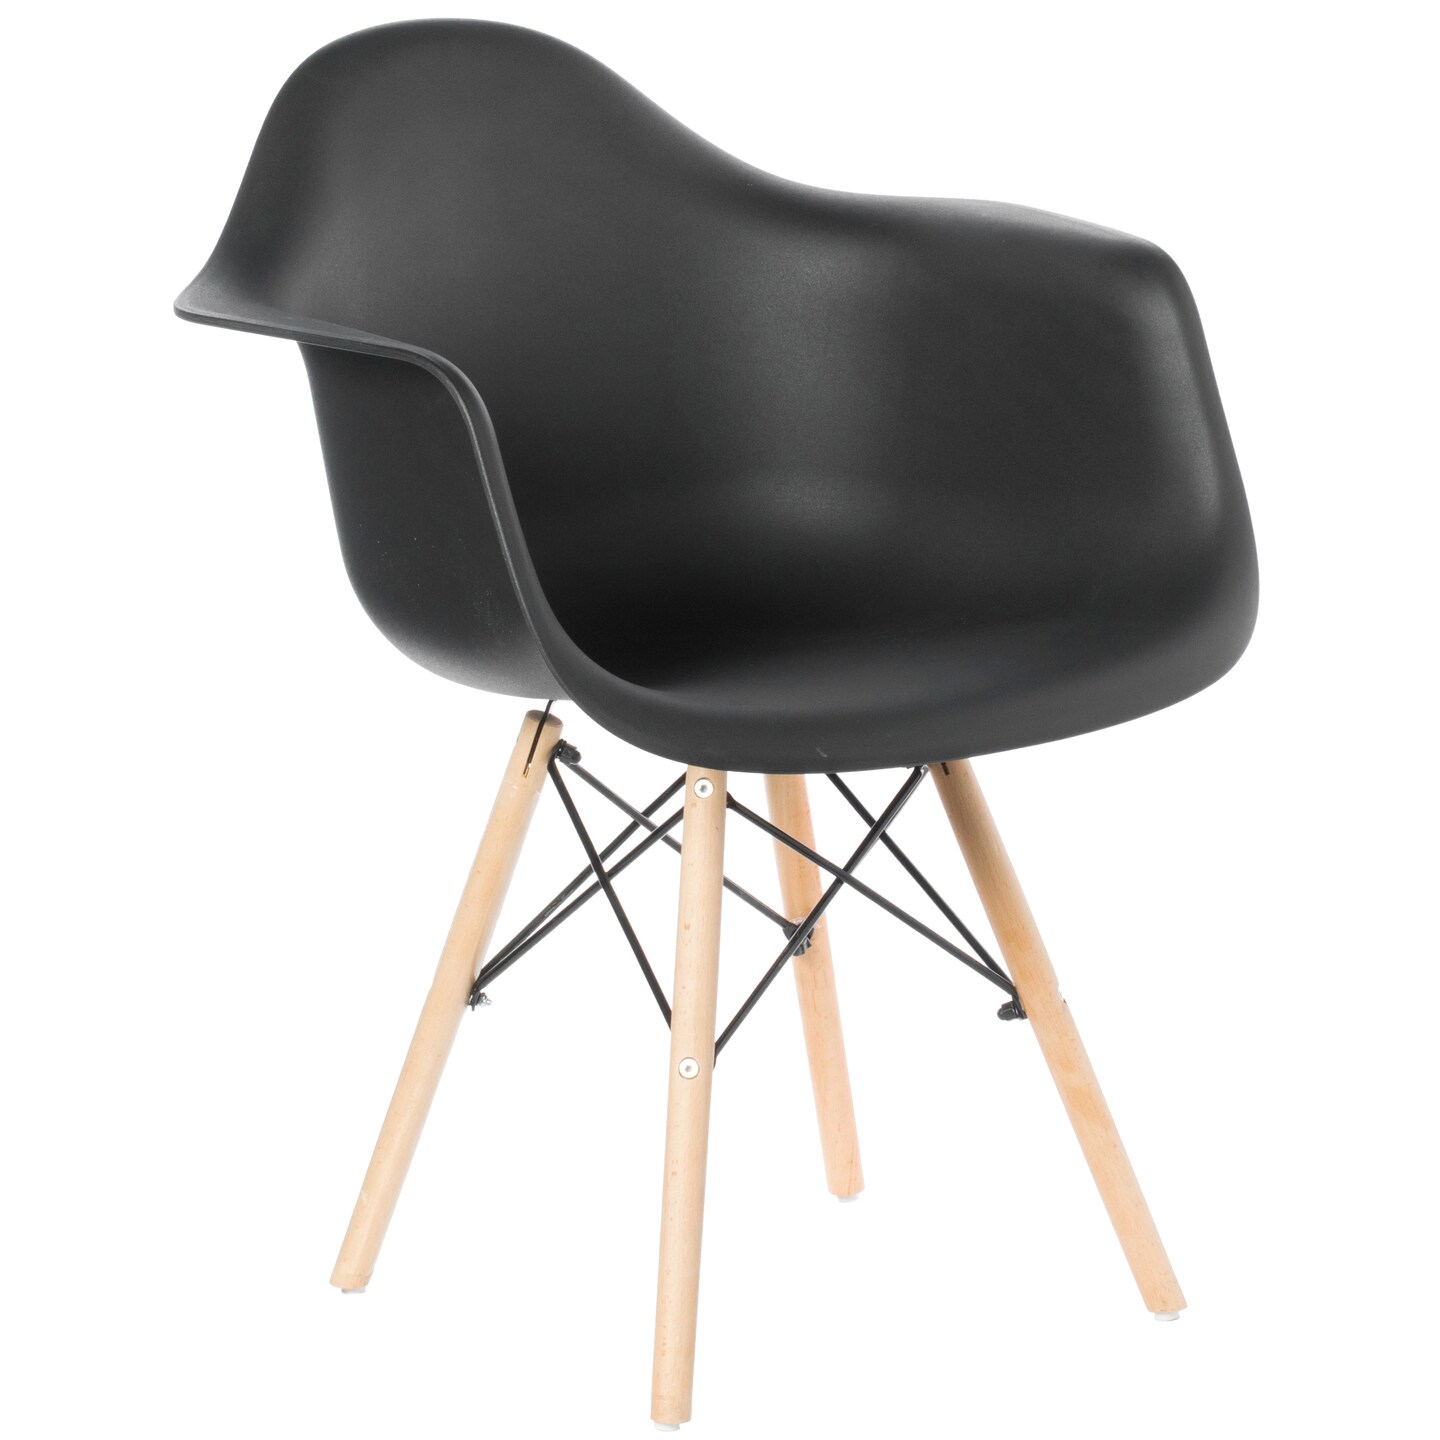 Fabulaxe Mid-Century Modern Style Plastic DAW Shell Dining Arm Chair with Wooden Dowel Eiffel Legs